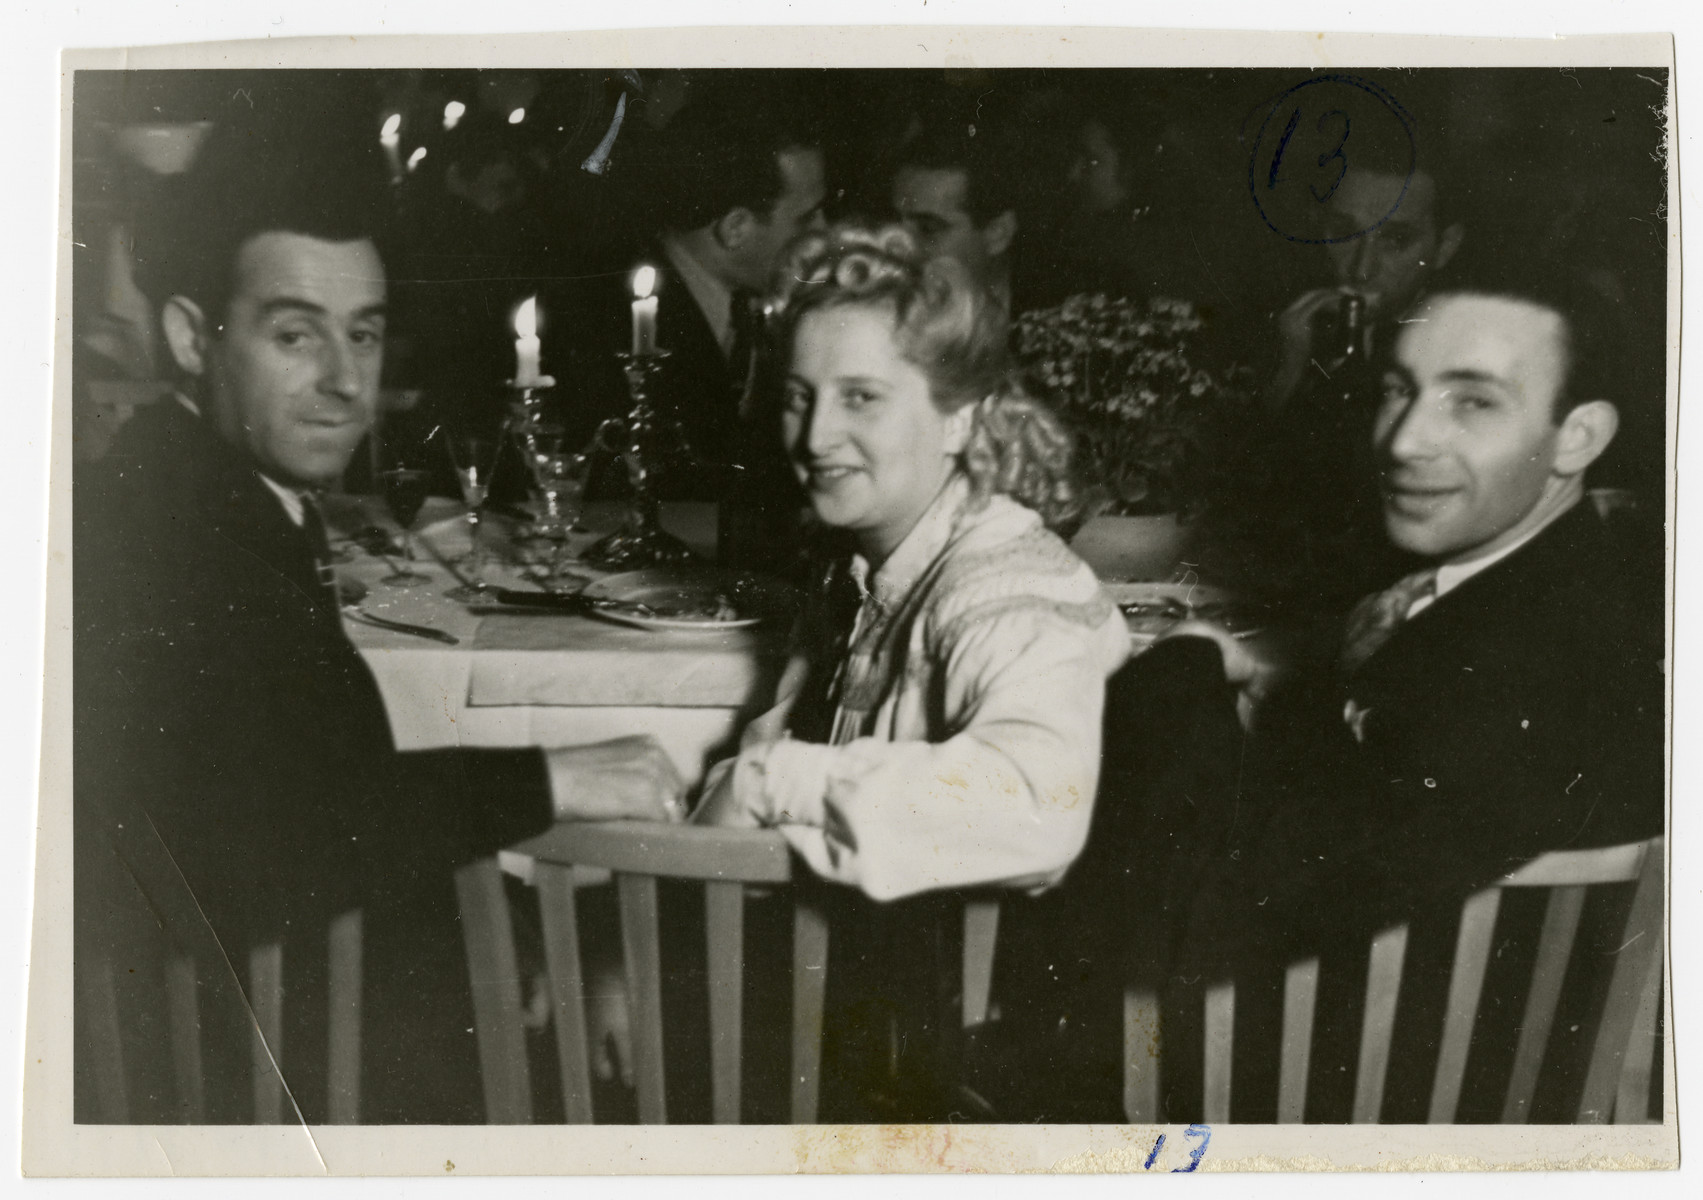 Solomon Manischewitz (left) enjoys a Shabbat dinner with his wife Sara and an unidentified friend.